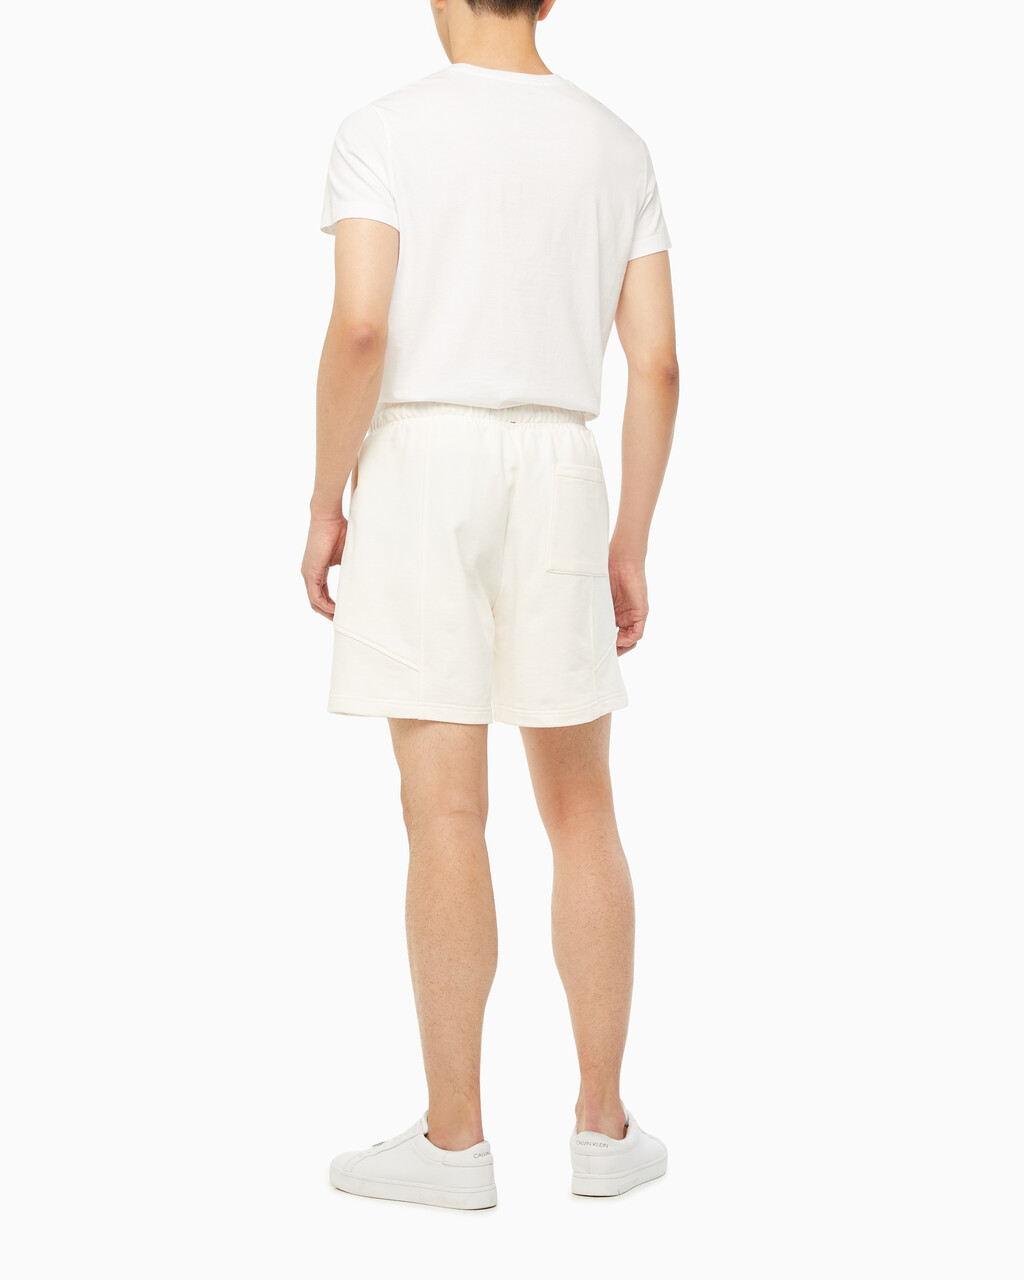 Buy 남성 시즈널 트리플 모노그램 스웨트 쇼츠 in color ANCIENT WHITE